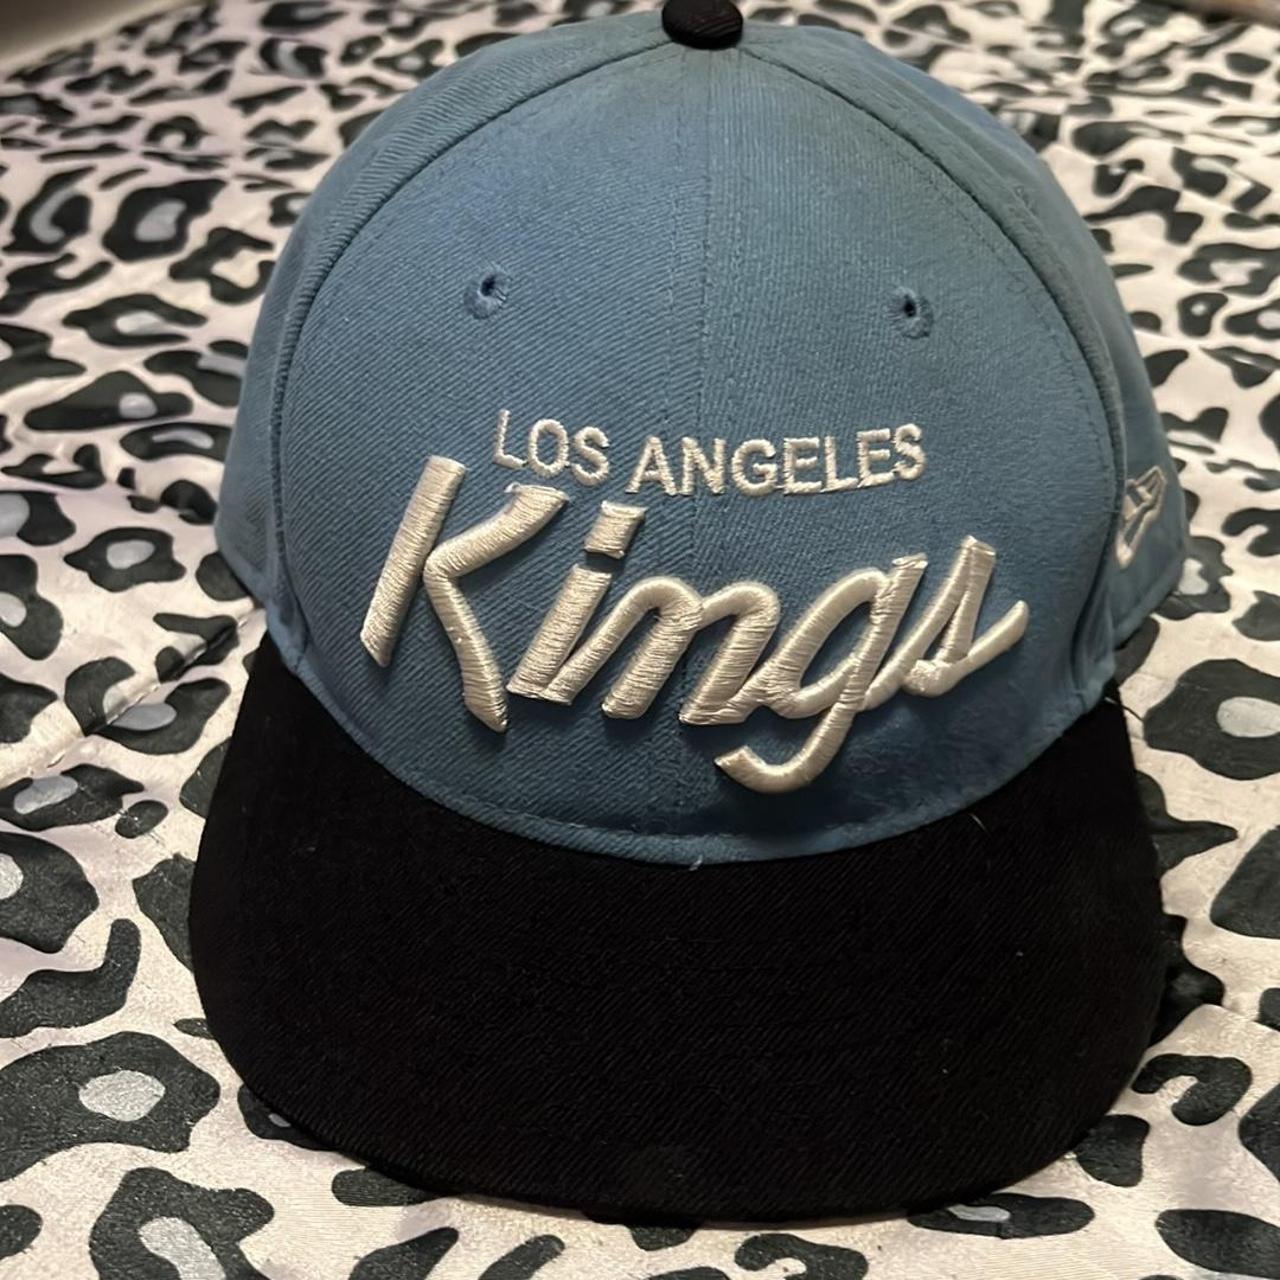 Los Angeles Kings Vintage Cap by Sports Specialties, Men's Fashion